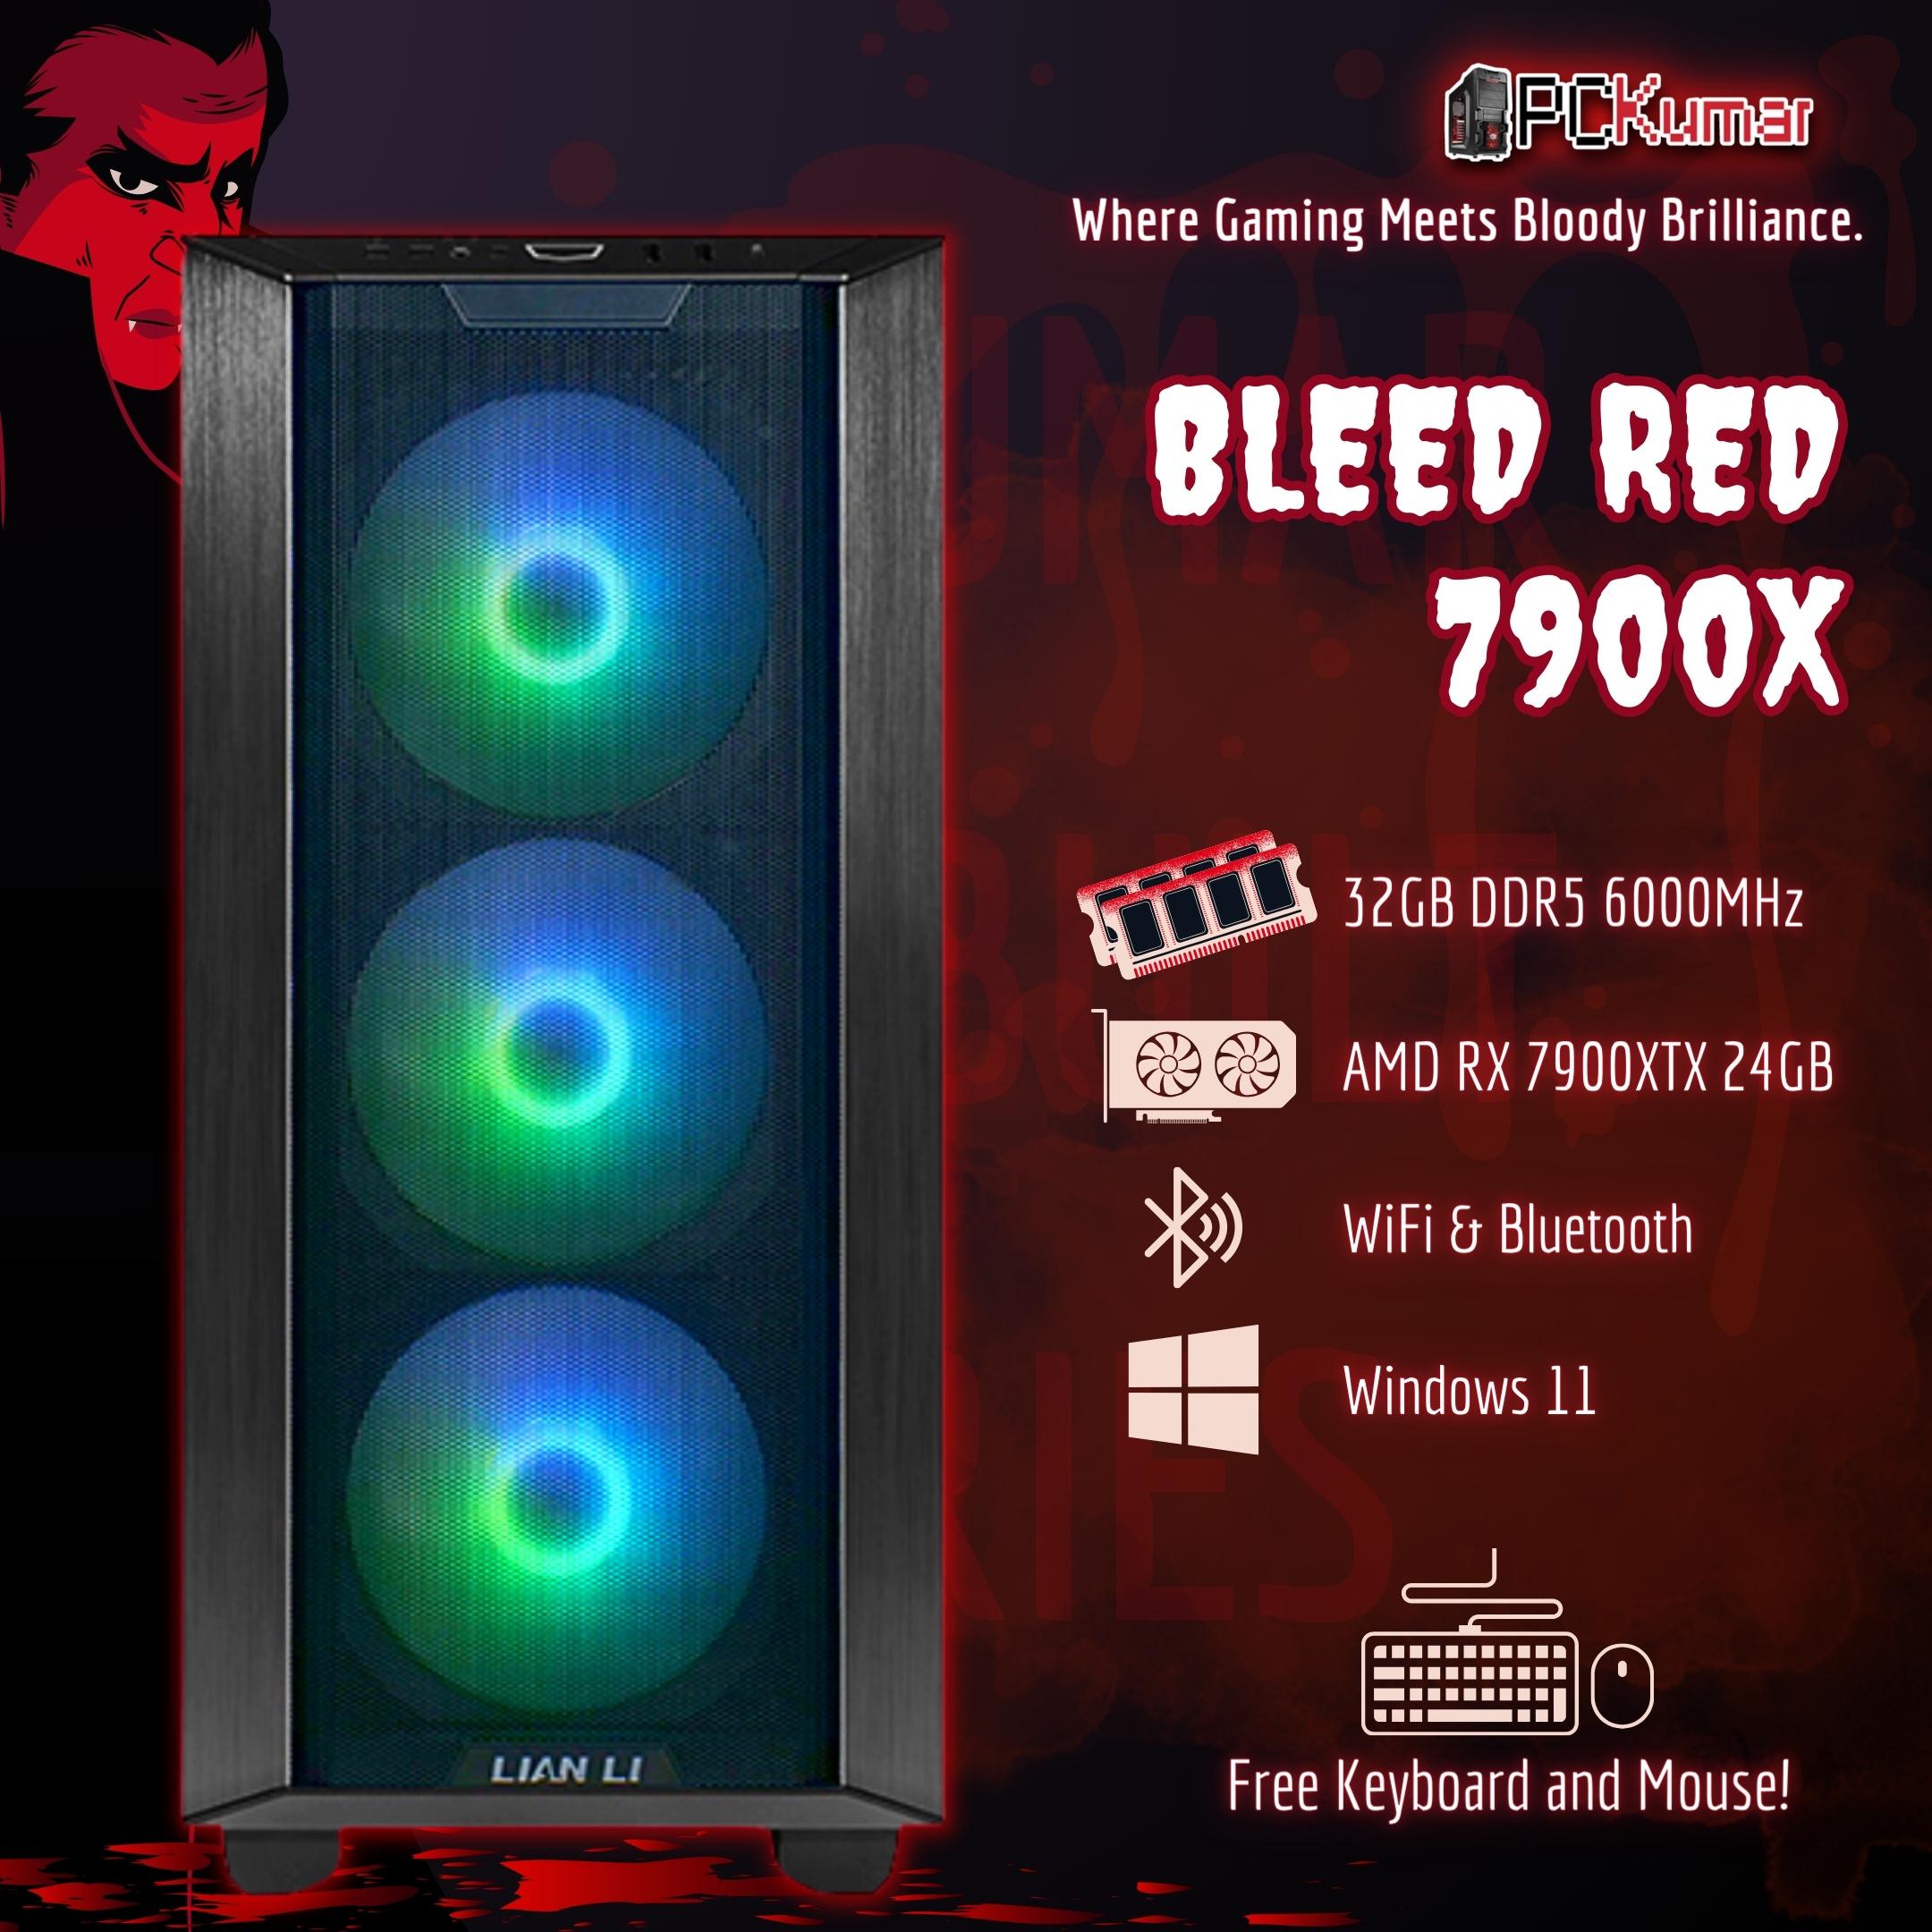 Bleed Red Gamer with AMD Ryzen 9 7900X + RX 7900XTX 24GB